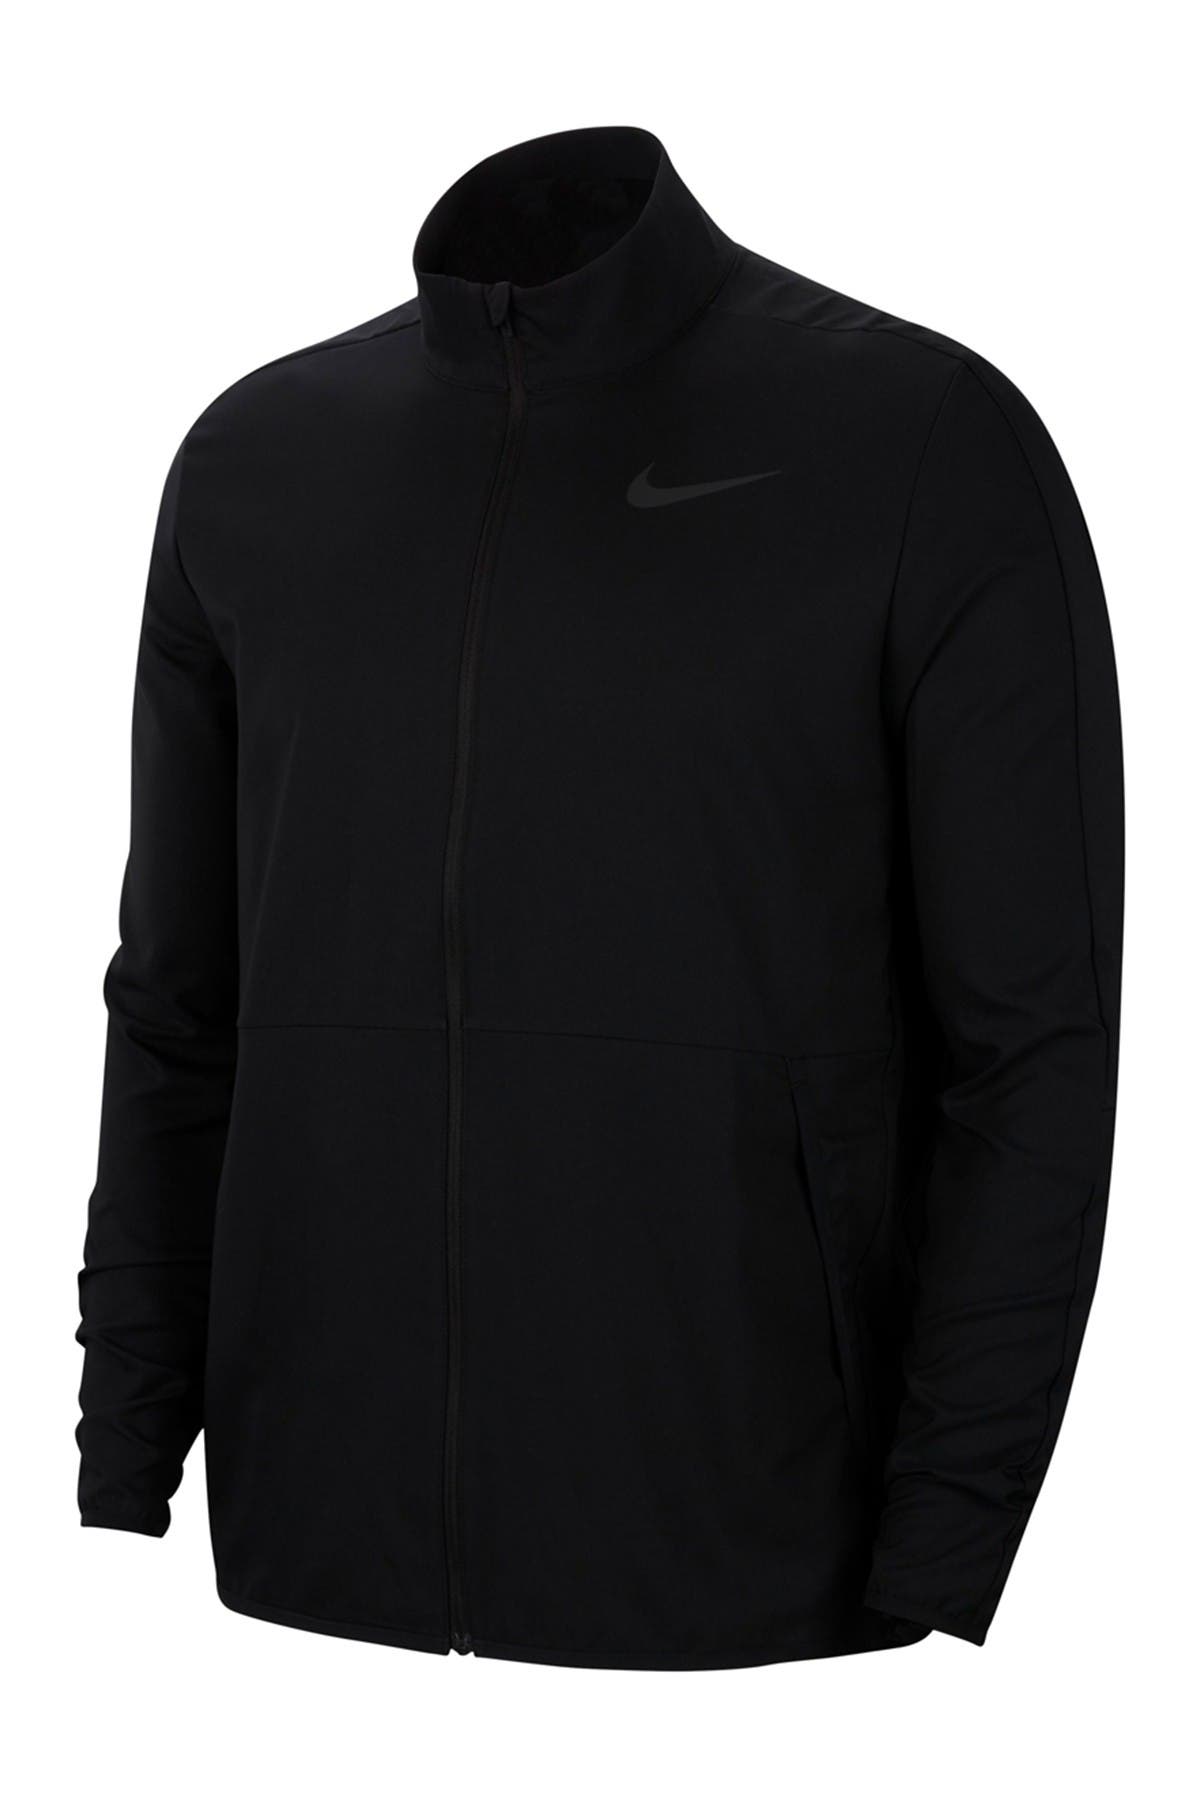 Nike | Dri-FIT Team Woven Jacket 